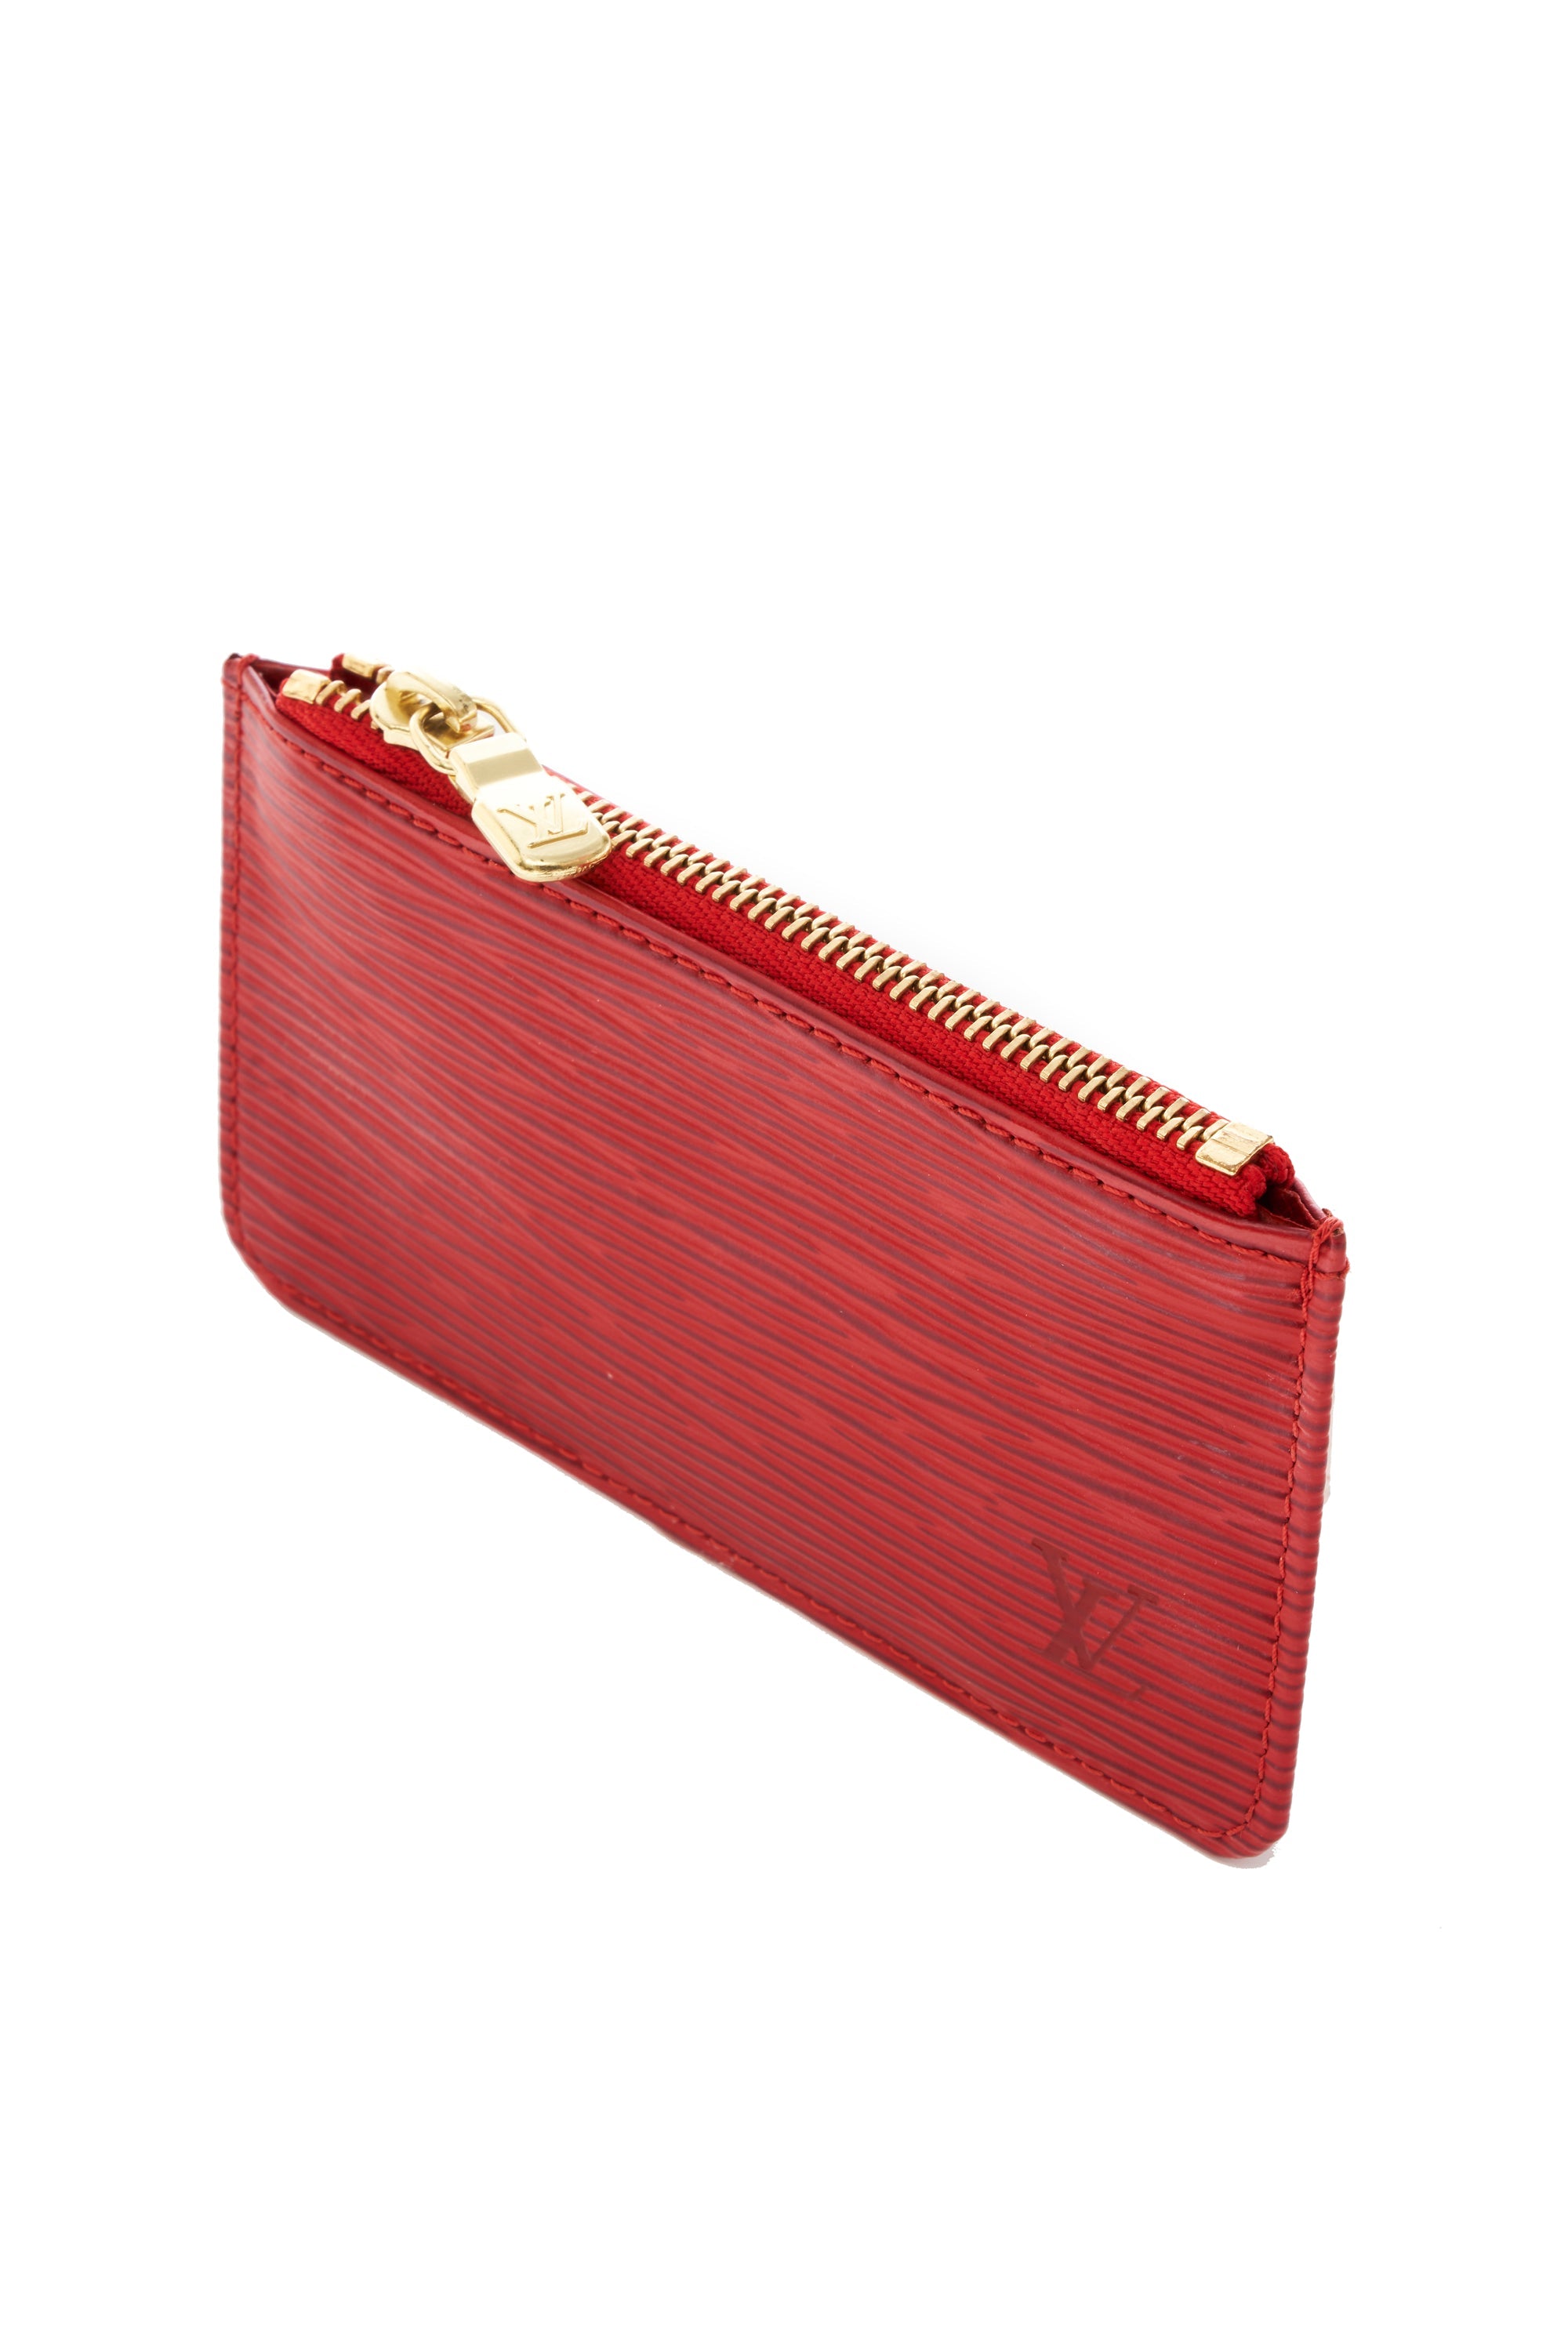 Louis Vuitton Red Epi Leather Mini Key Pouch - Foxy Couture Carmel